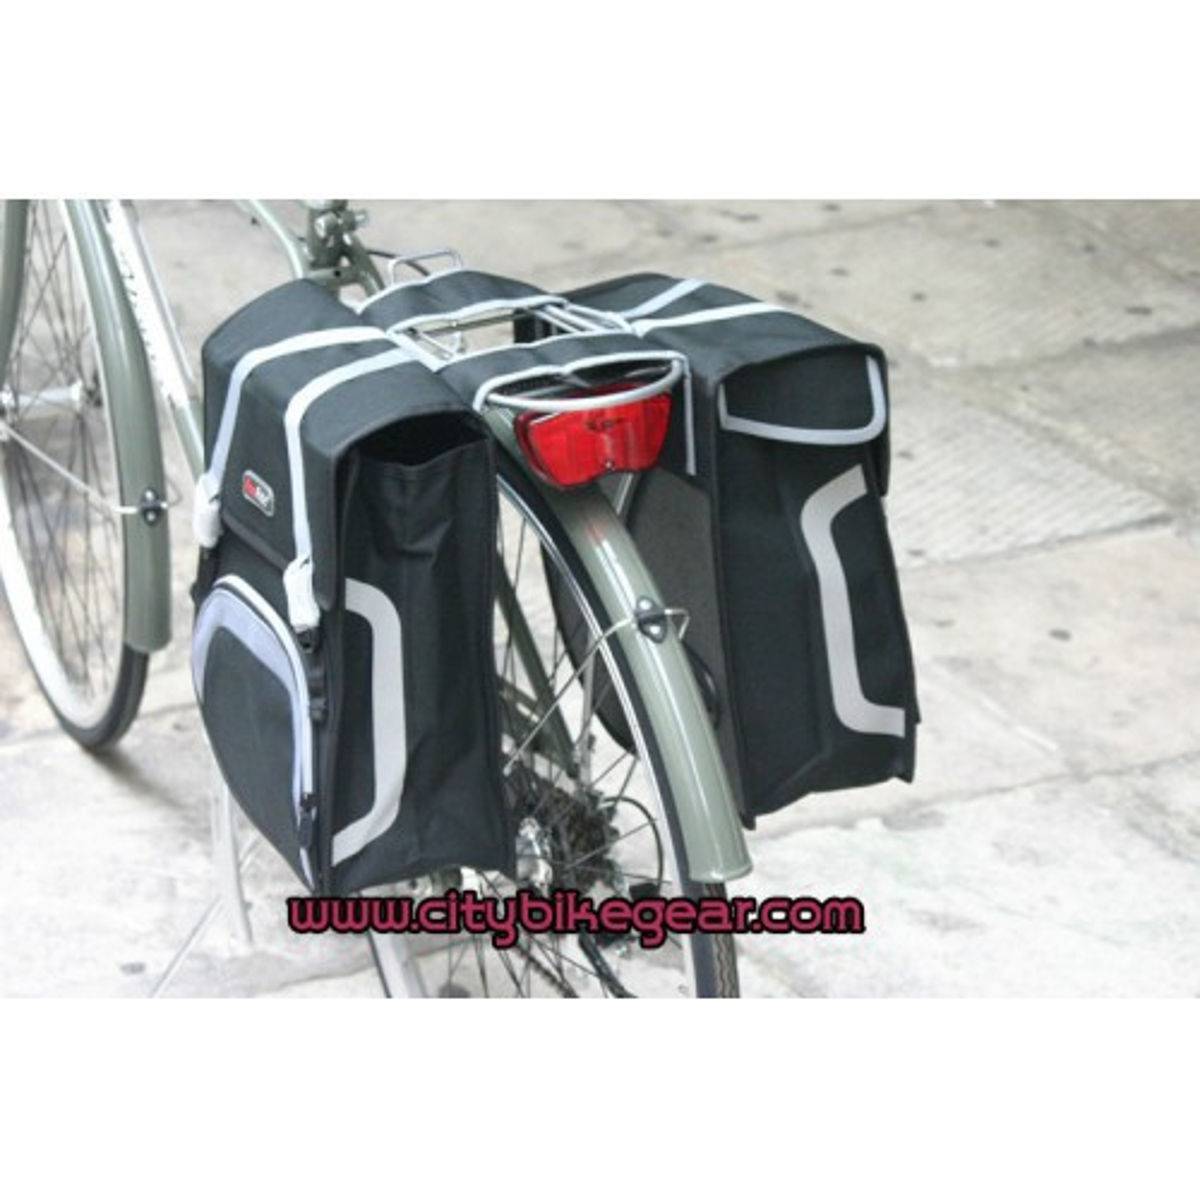 fast rider bike bags